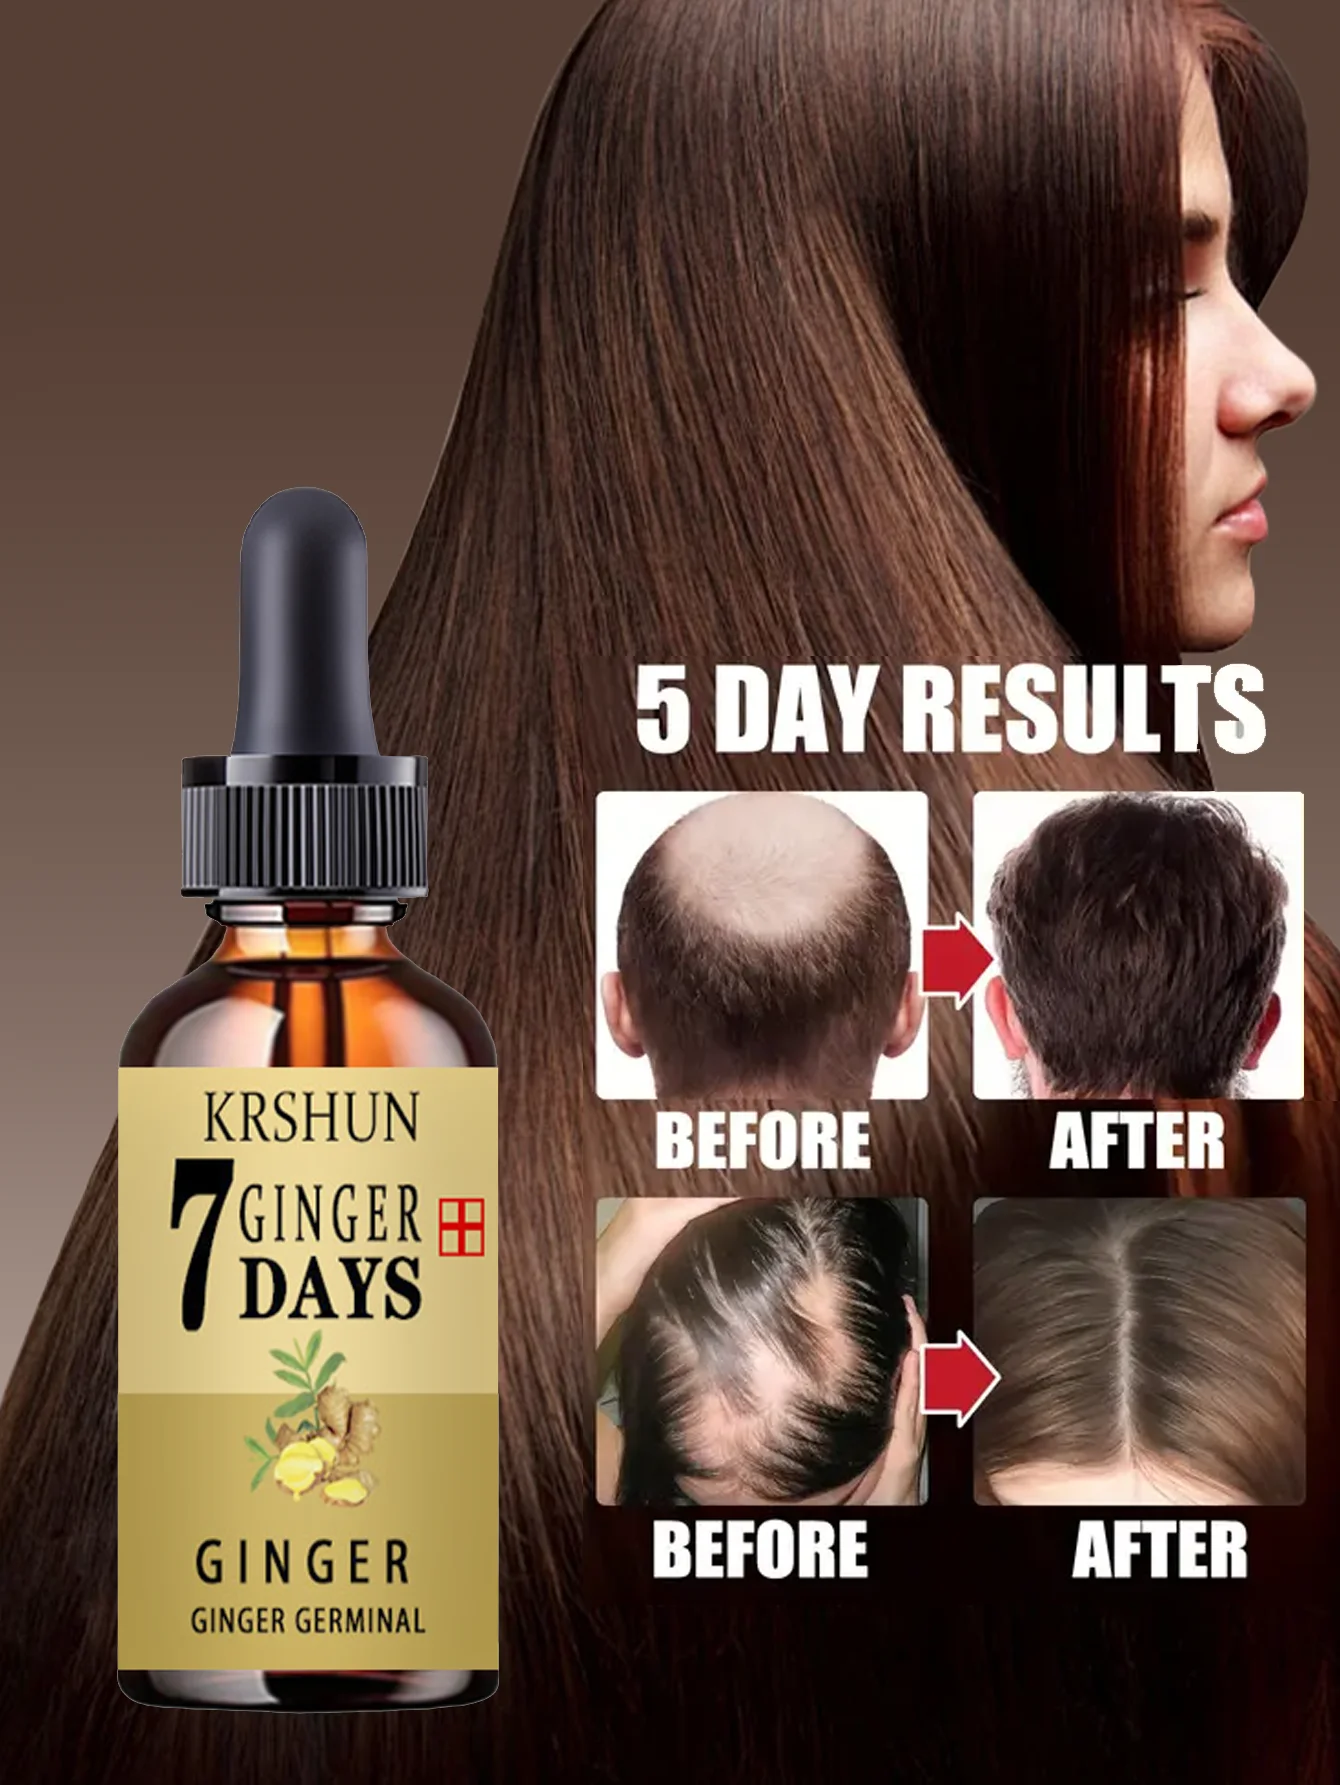 7DAYS Ginger Hair Growth Nutrient Solution Hair Loss Treatment Essential Oil Hair Care Essential Oil Men's Hair Conditioner